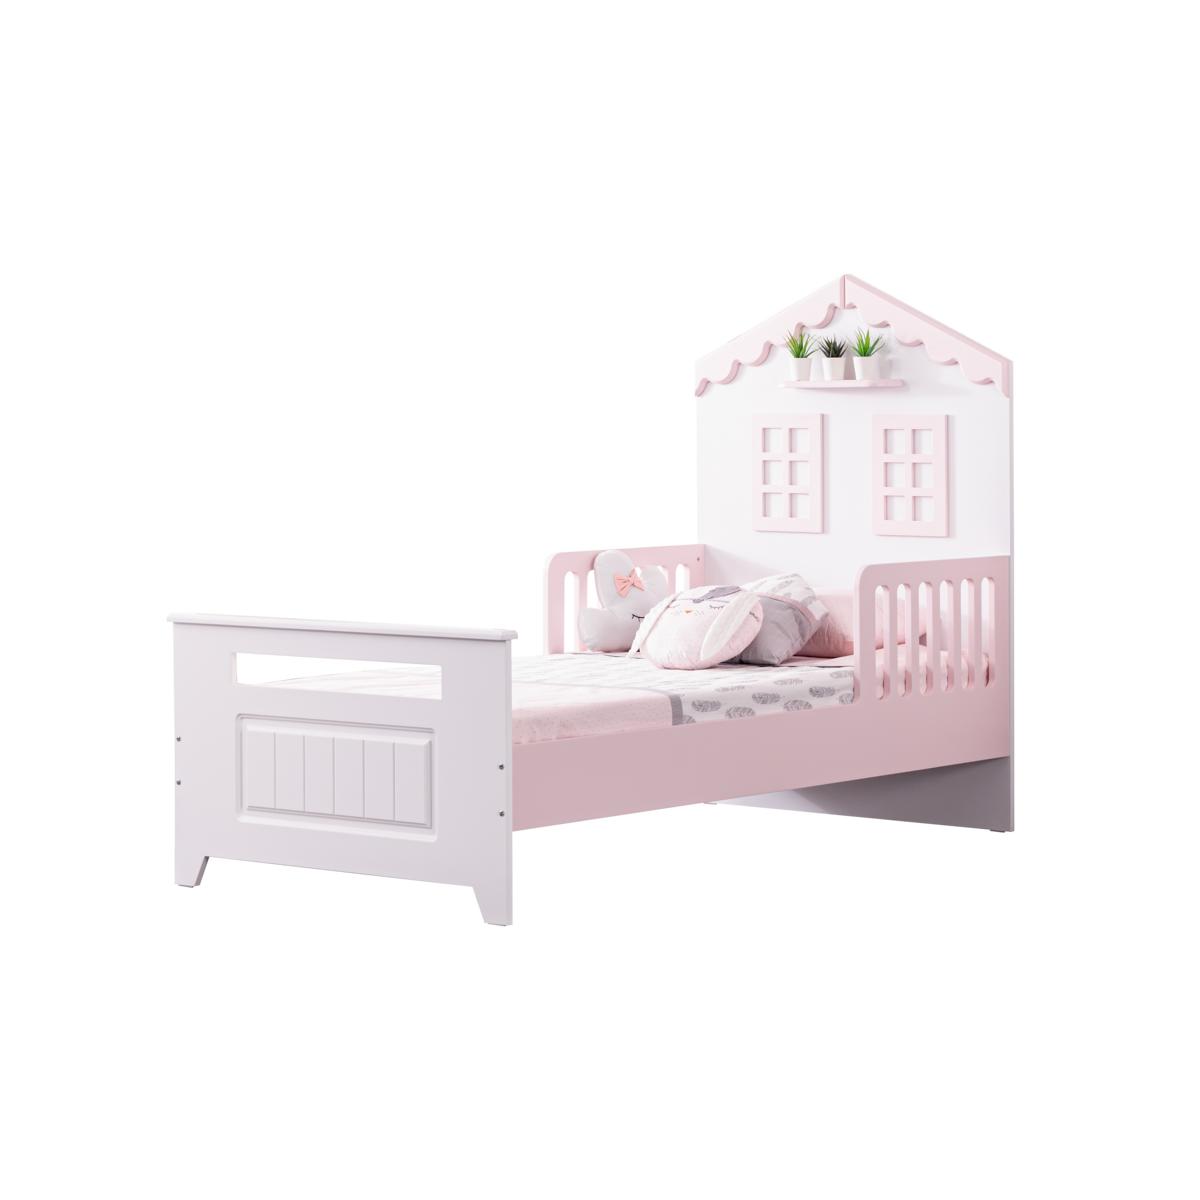 Odacix Kinderbett Fethiye 90x190 cm Weiß Pink